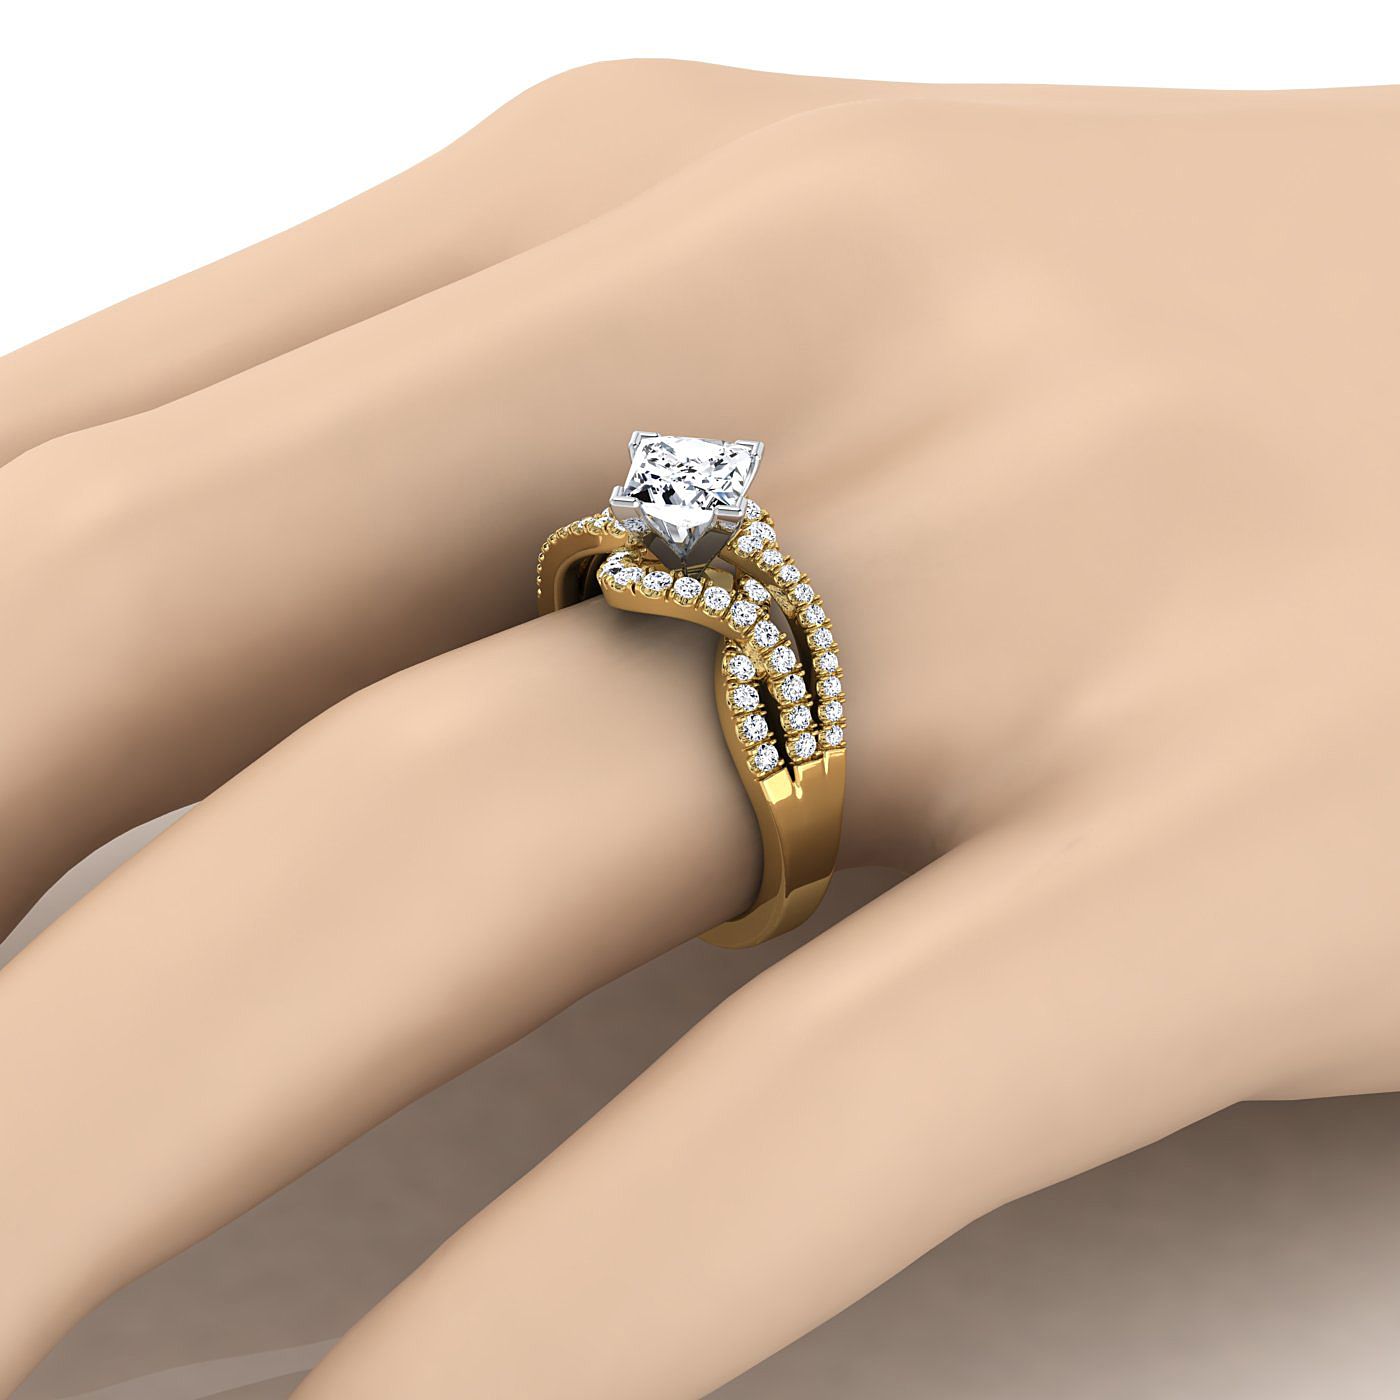 14K Yellow Gold Princess Cut Bypass Twist French Pave Swirl Diamond Engagement Ring -1/2ctw